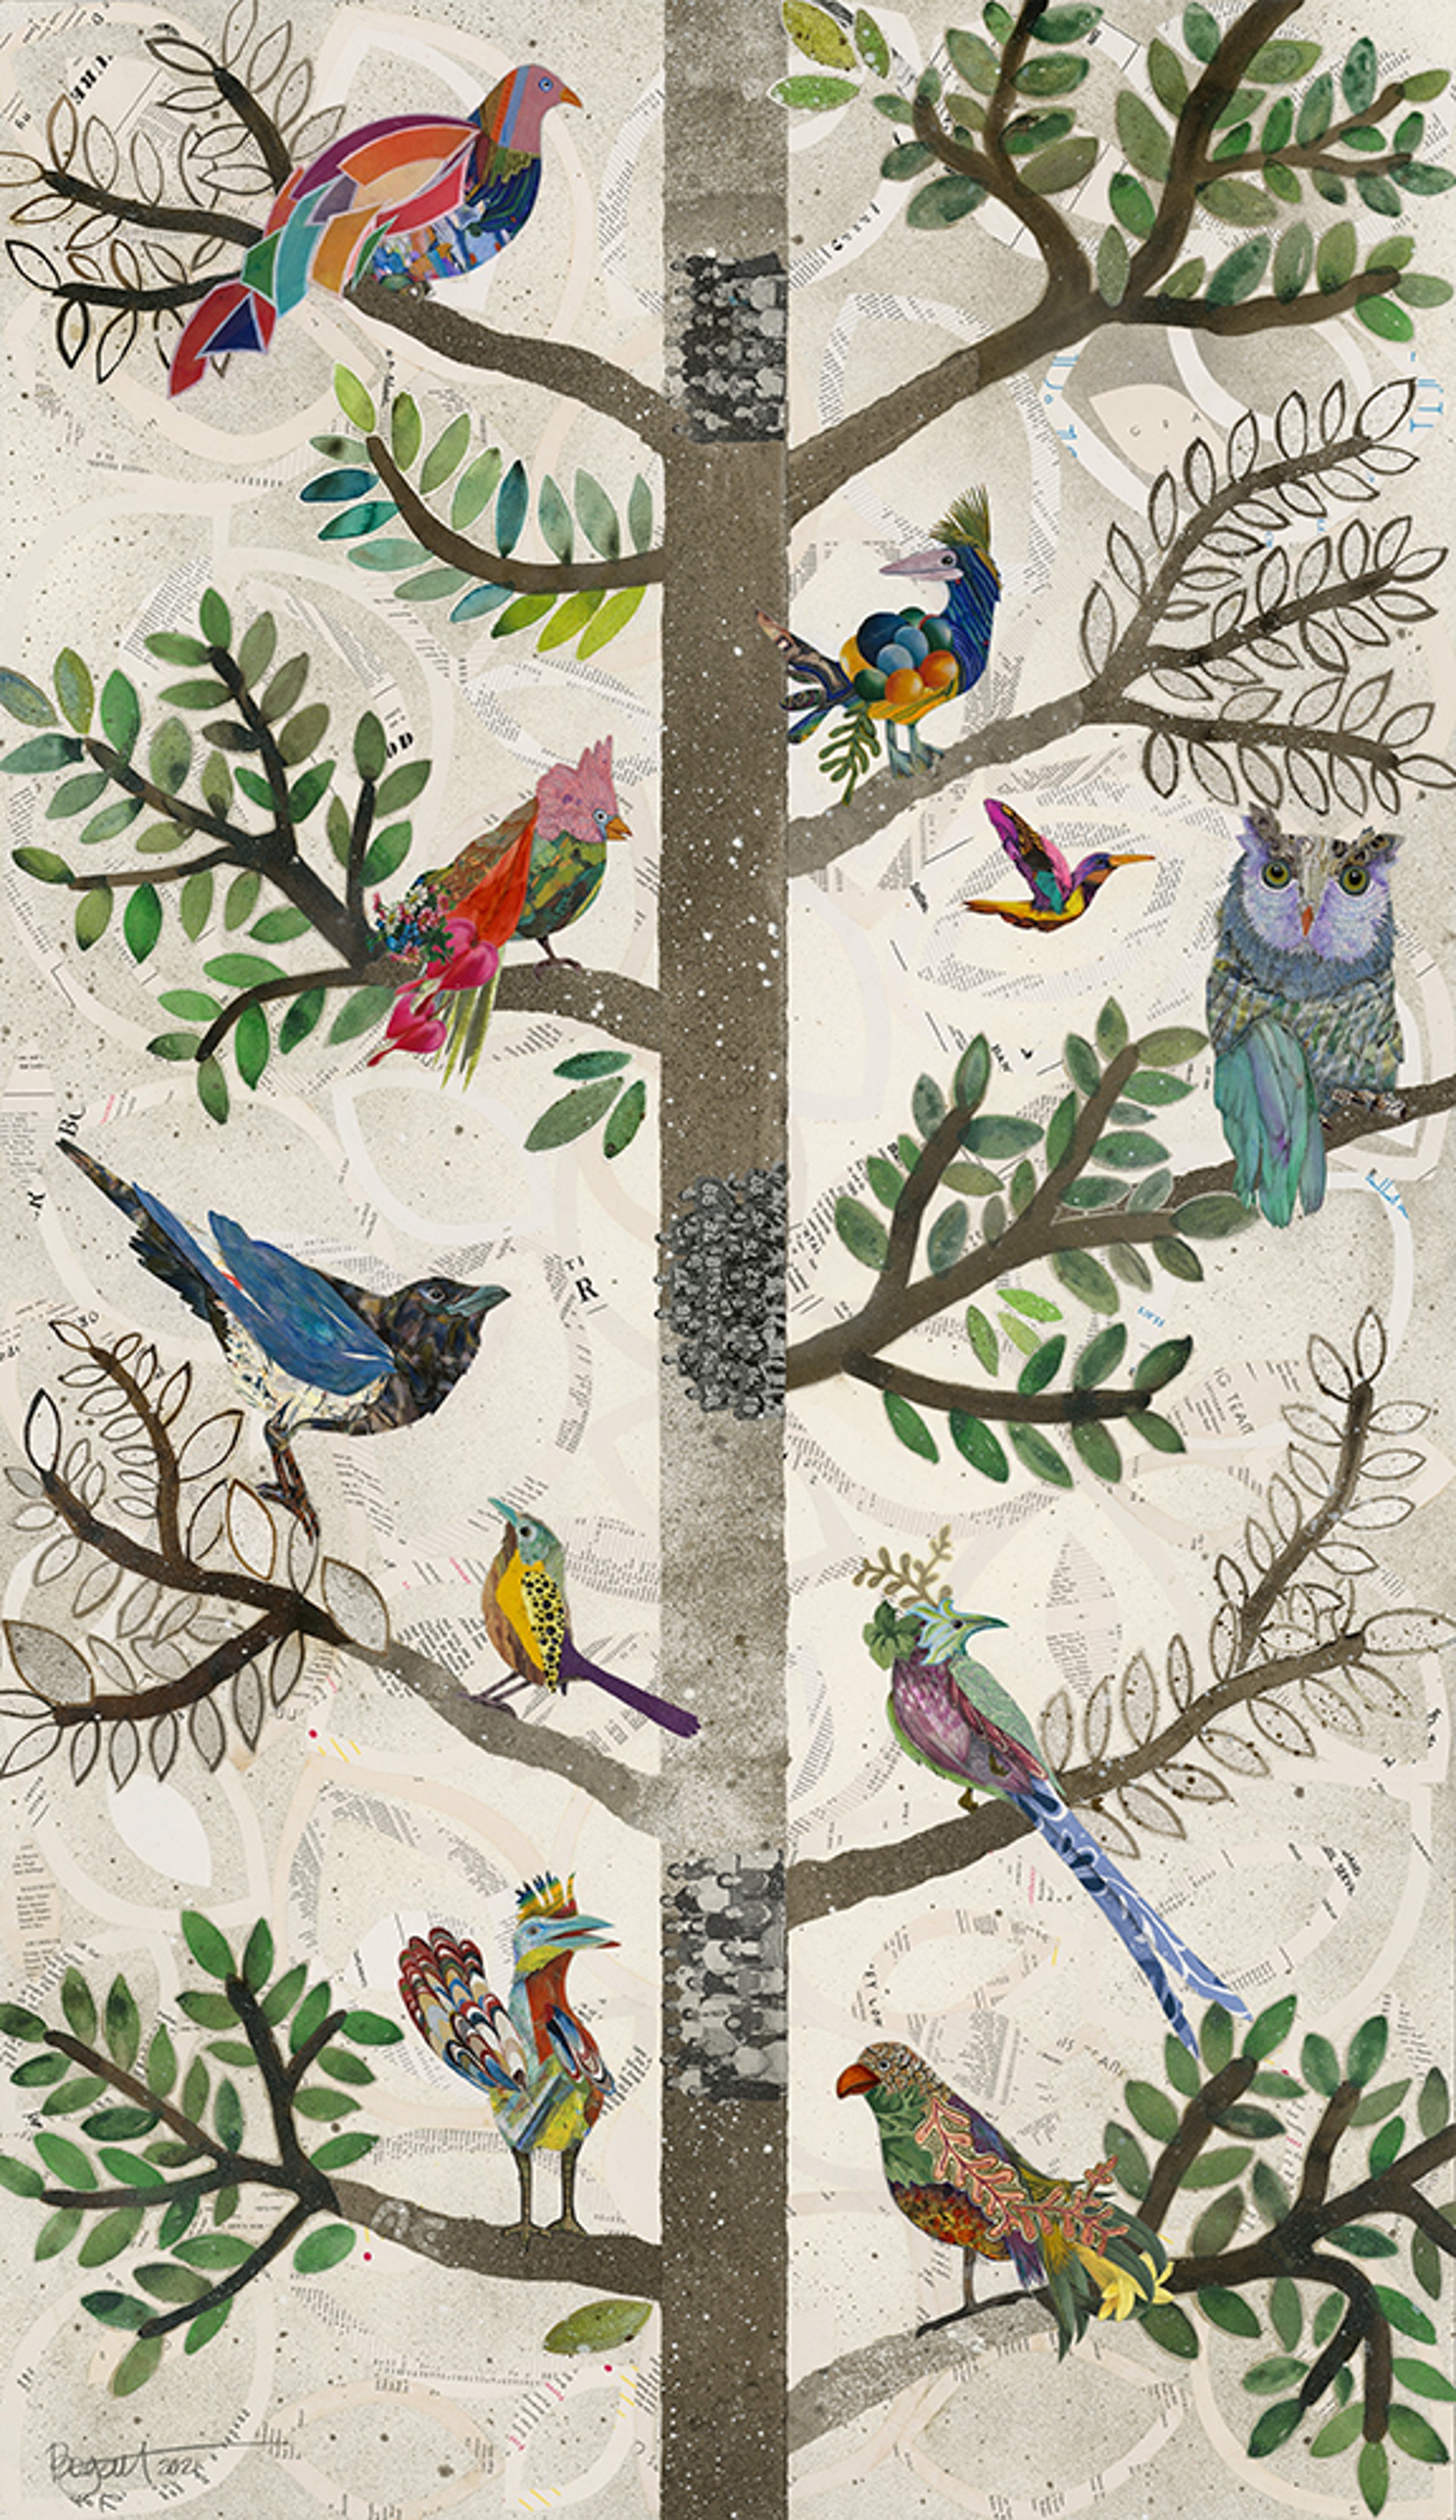 Tree of Life 6 by Brenda Bogart - Prints